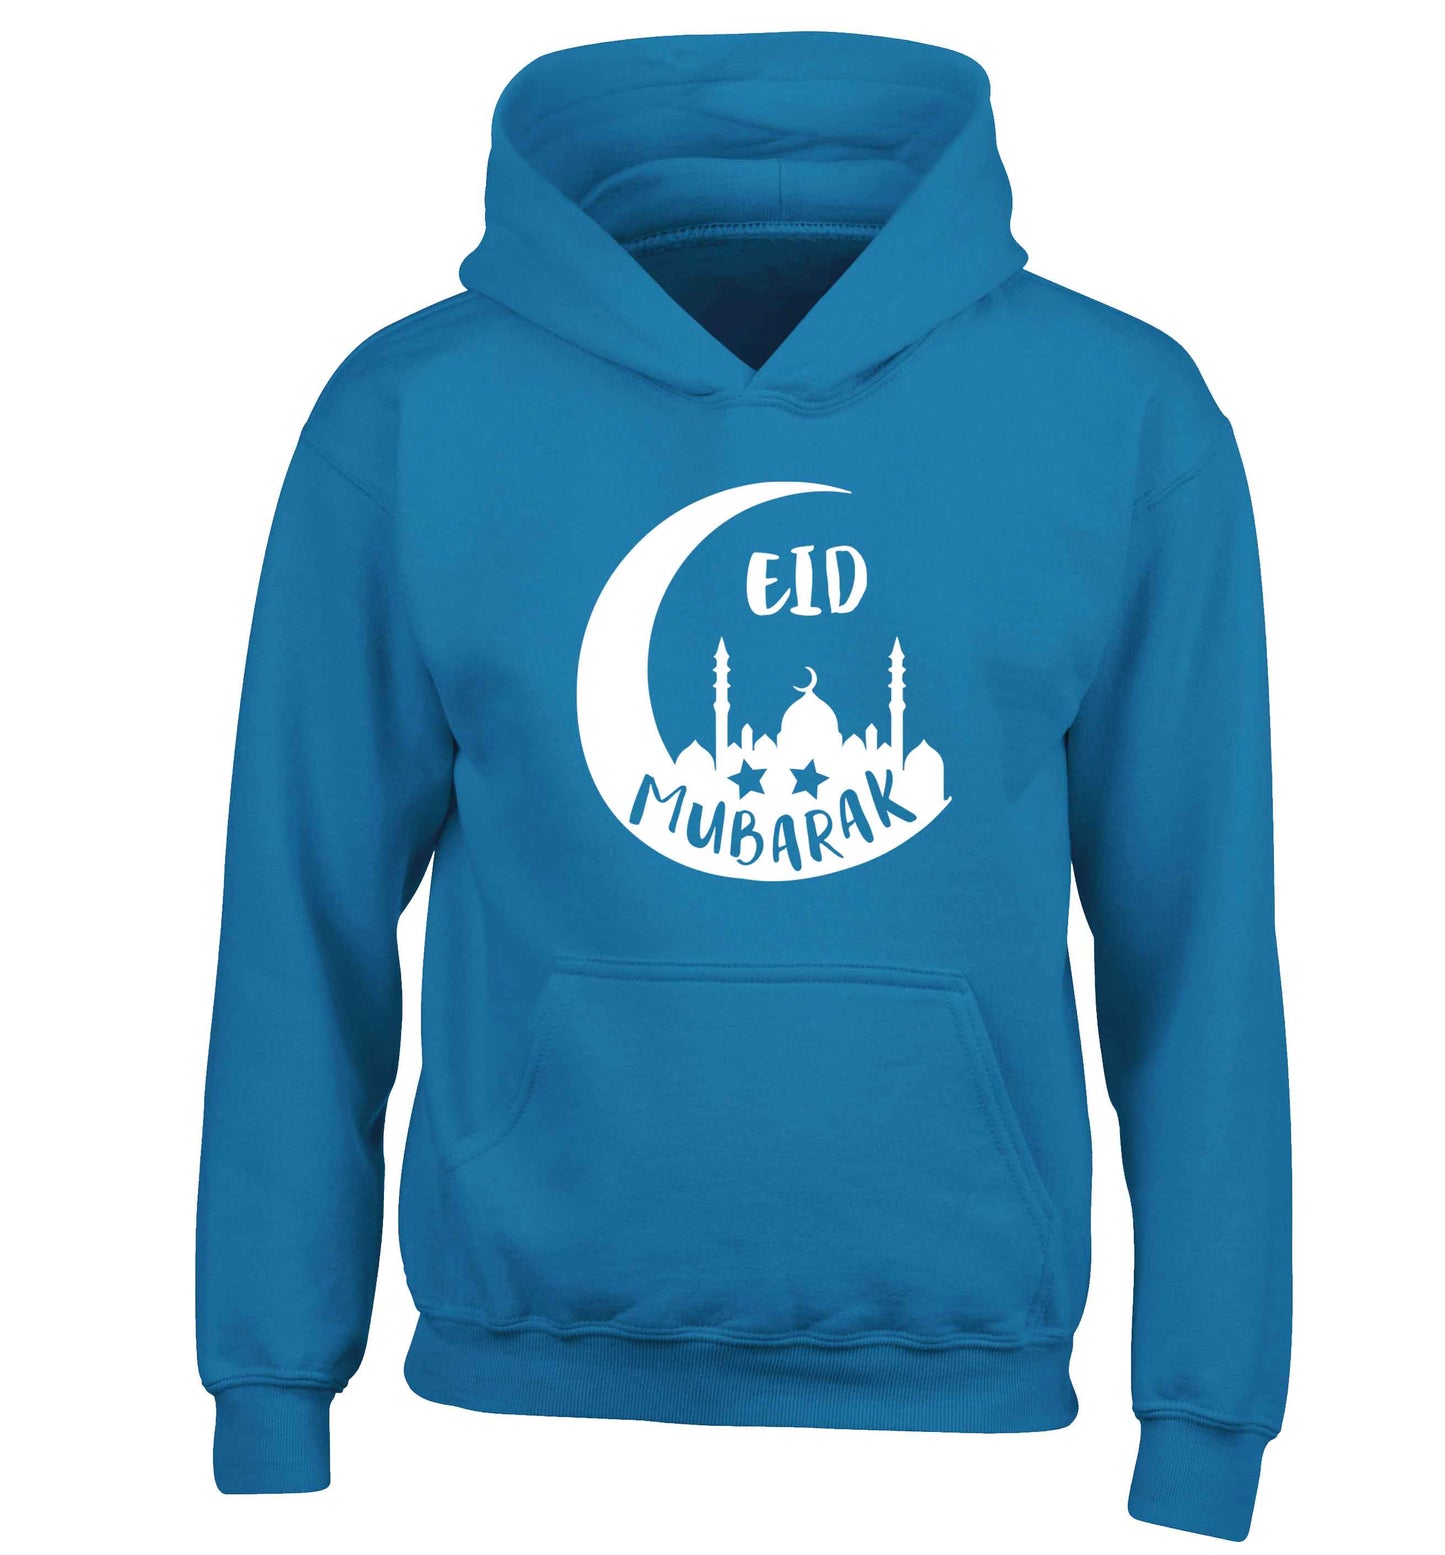 Eid mubarak children's blue hoodie 12-13 Years